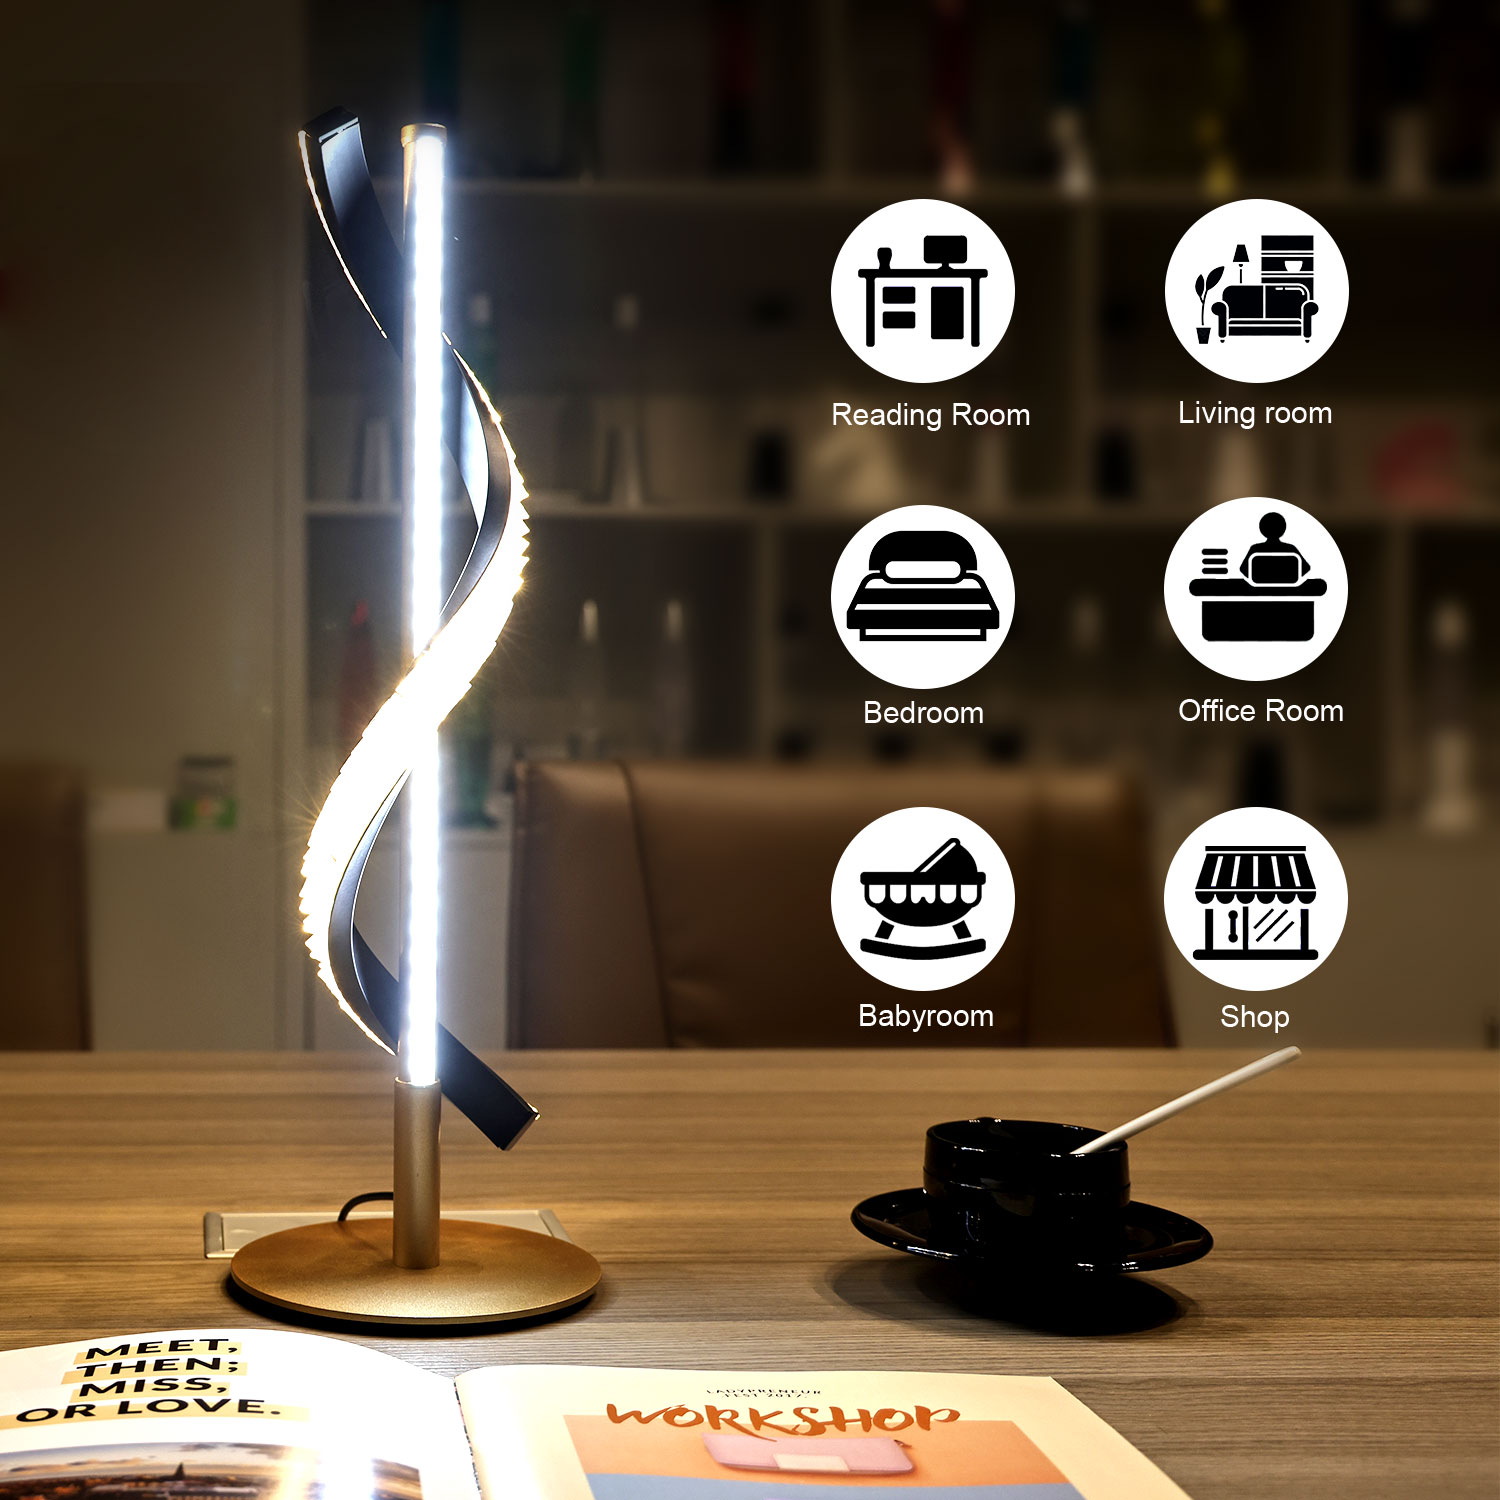 LED Light Fixtures, Desk Lamp for Studying/Bedroom